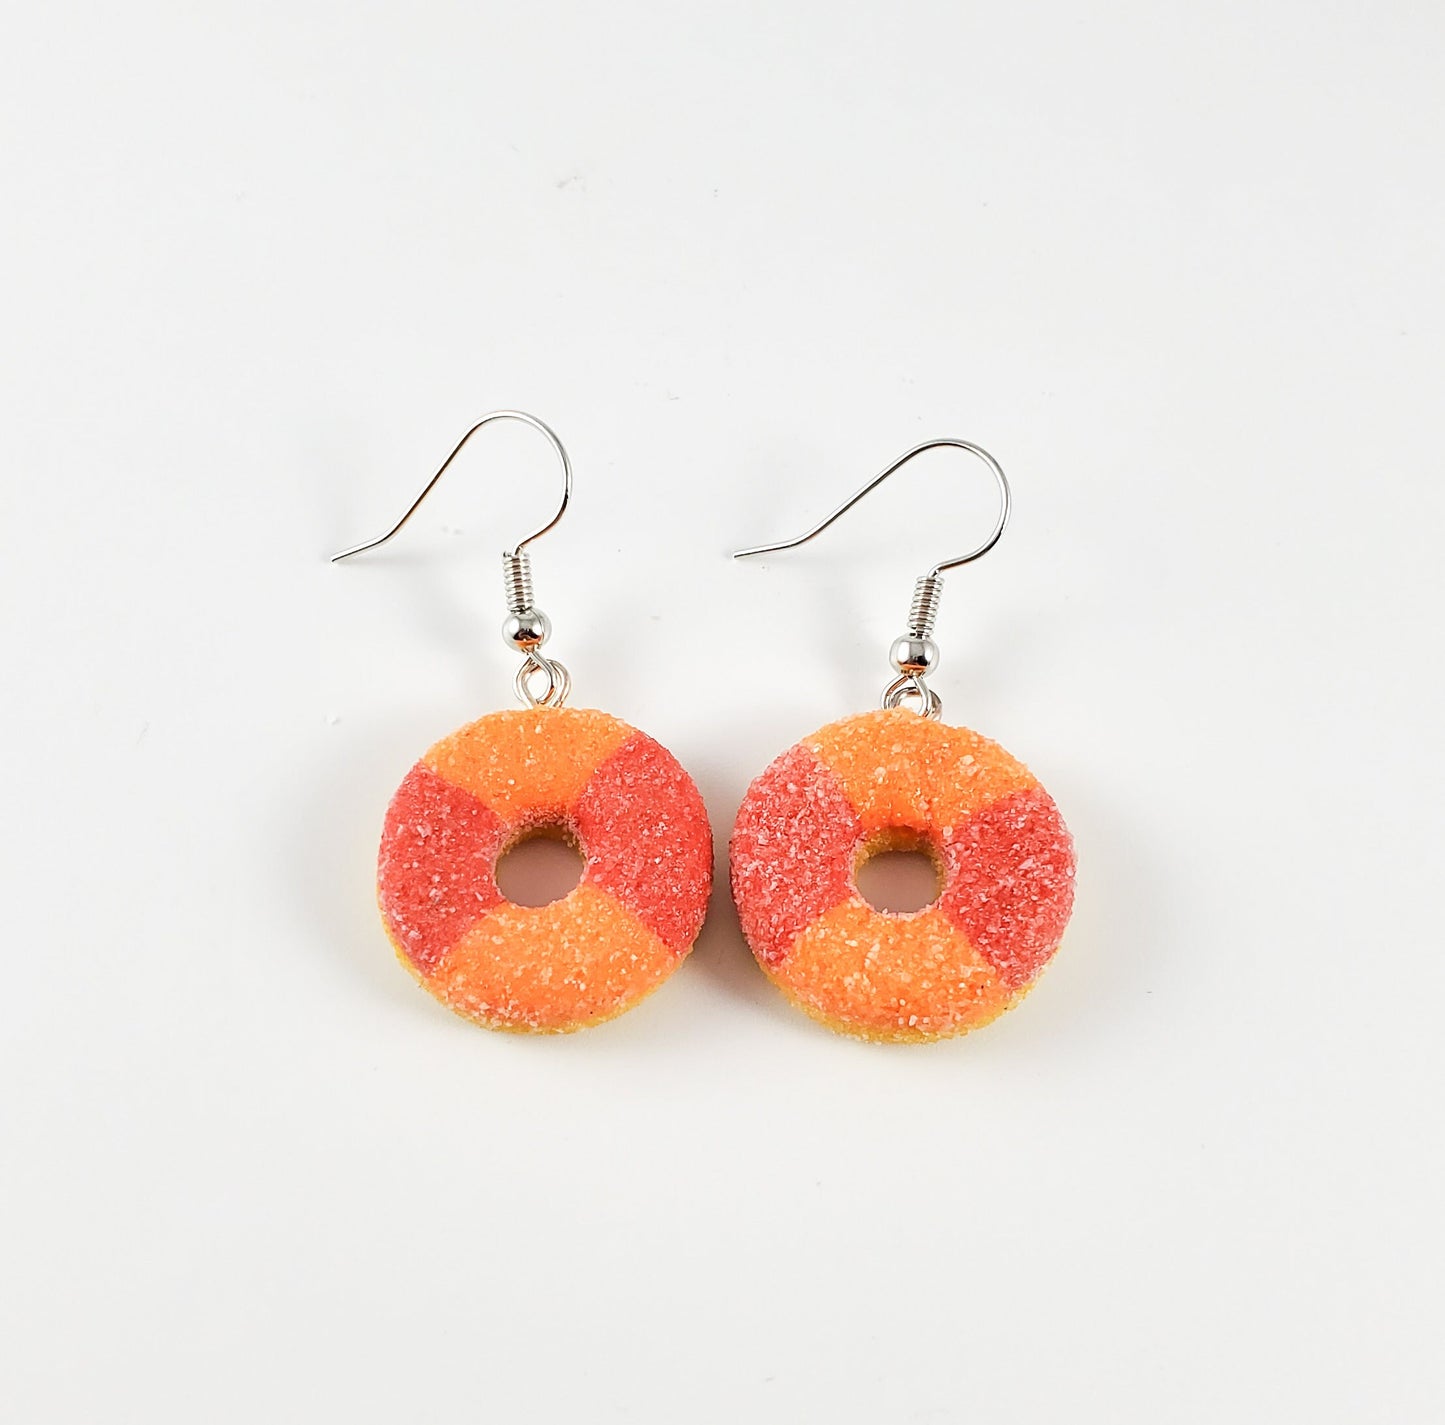 Peach ring gummy candy earrings